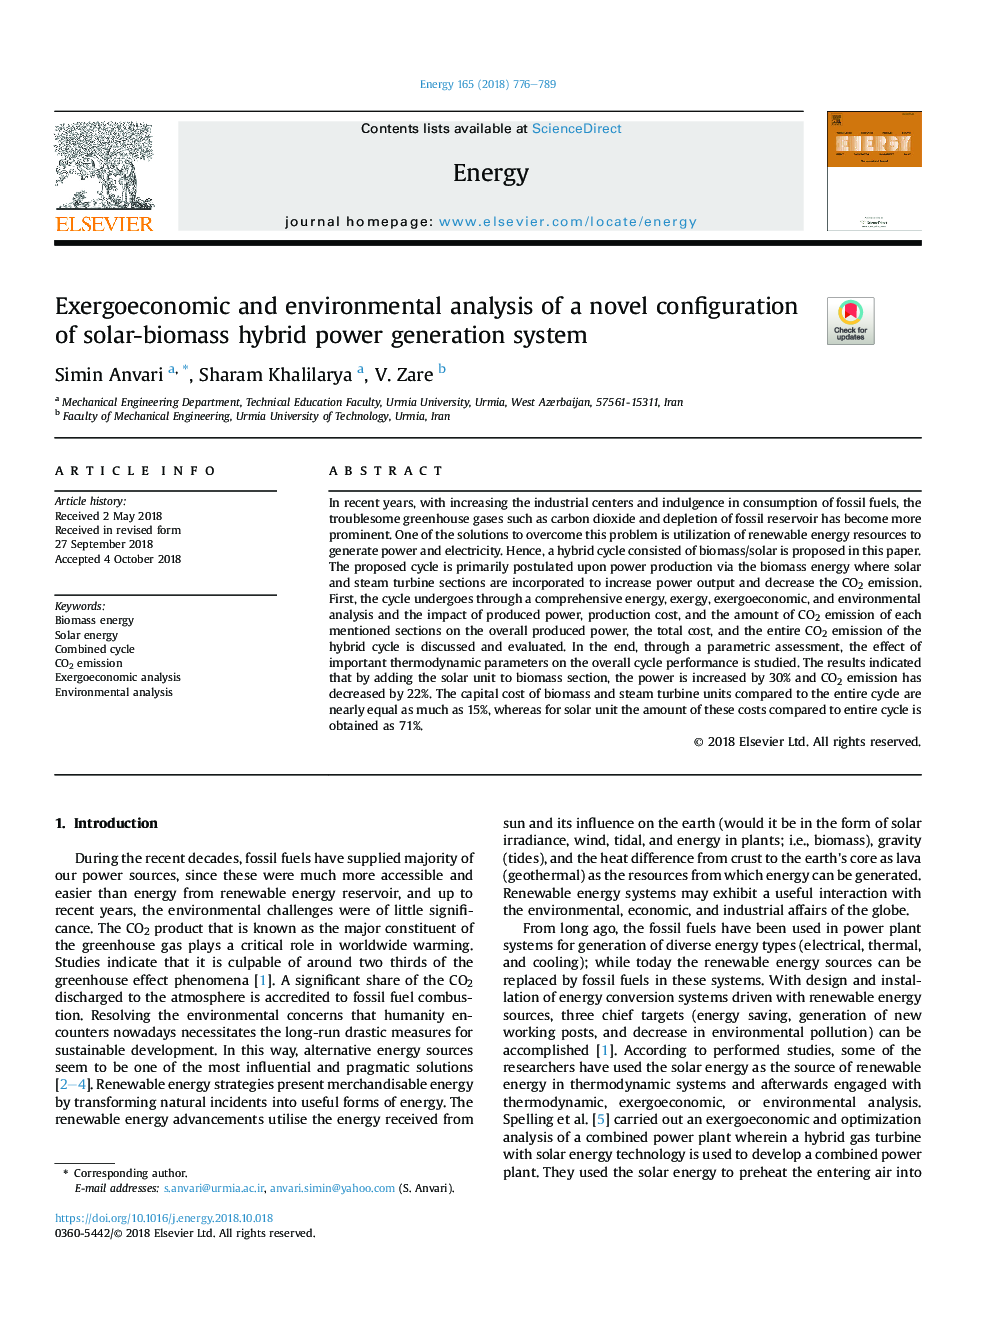 Exergoeconomic and environmental analysis of a novel configuration of solar-biomass hybrid power generation system